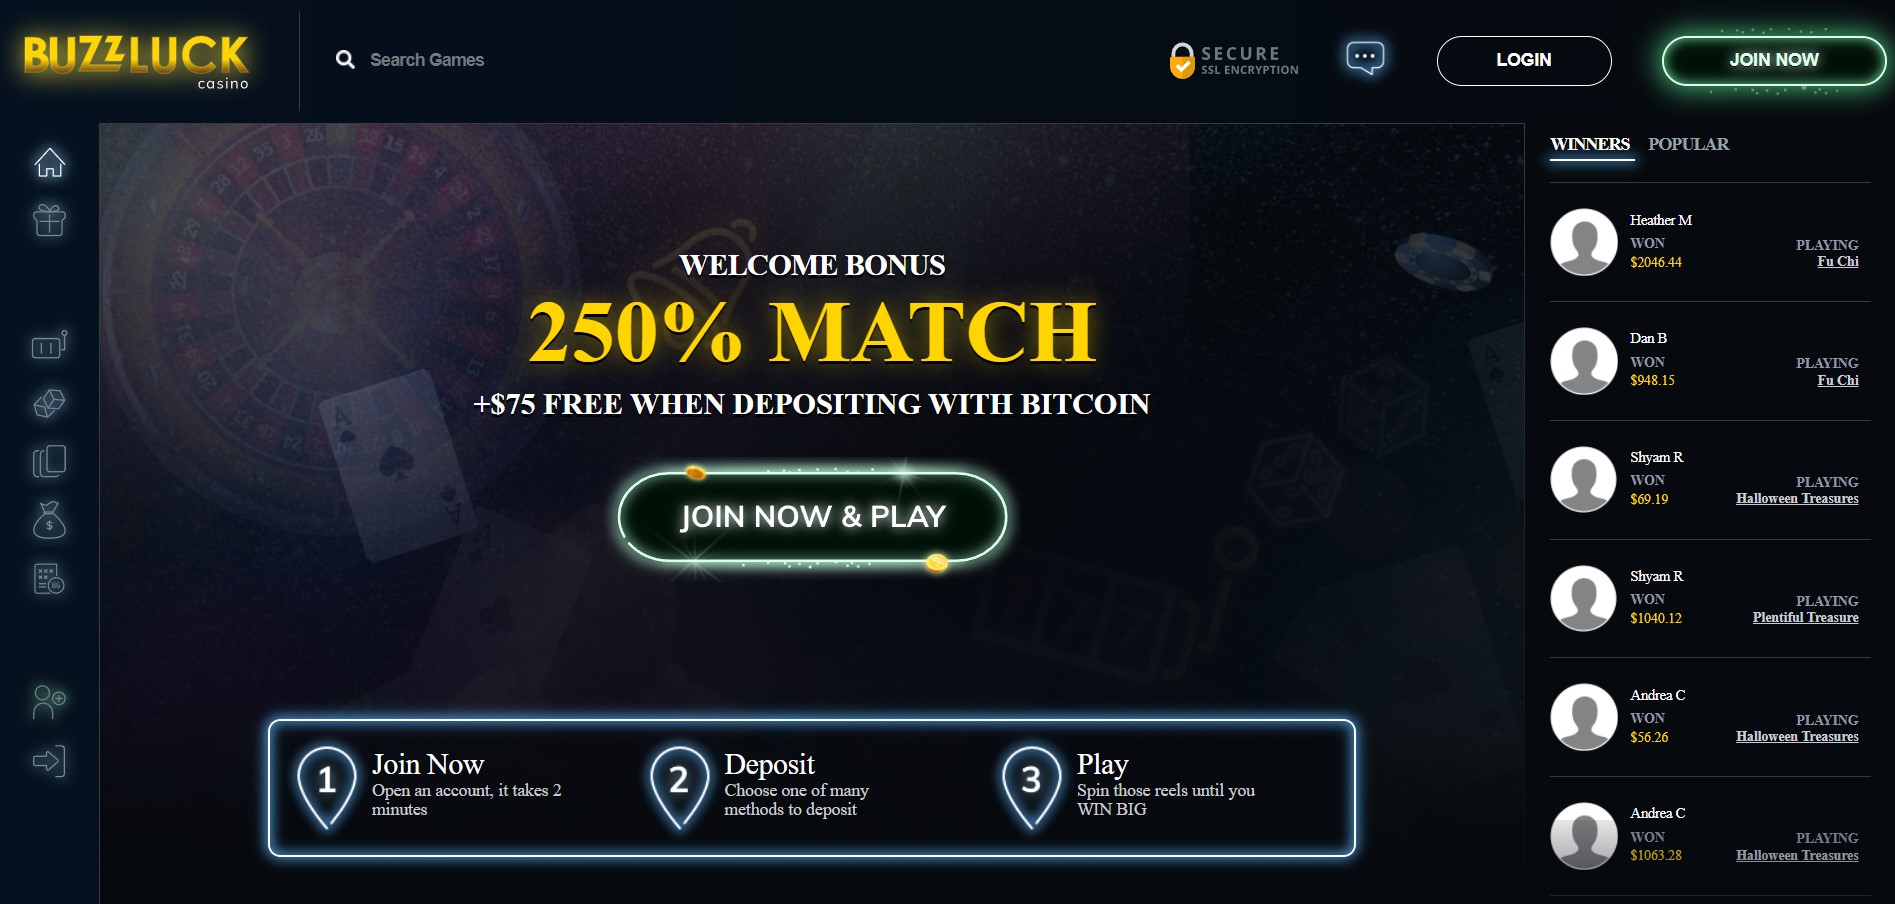 Buzzluck online casino review